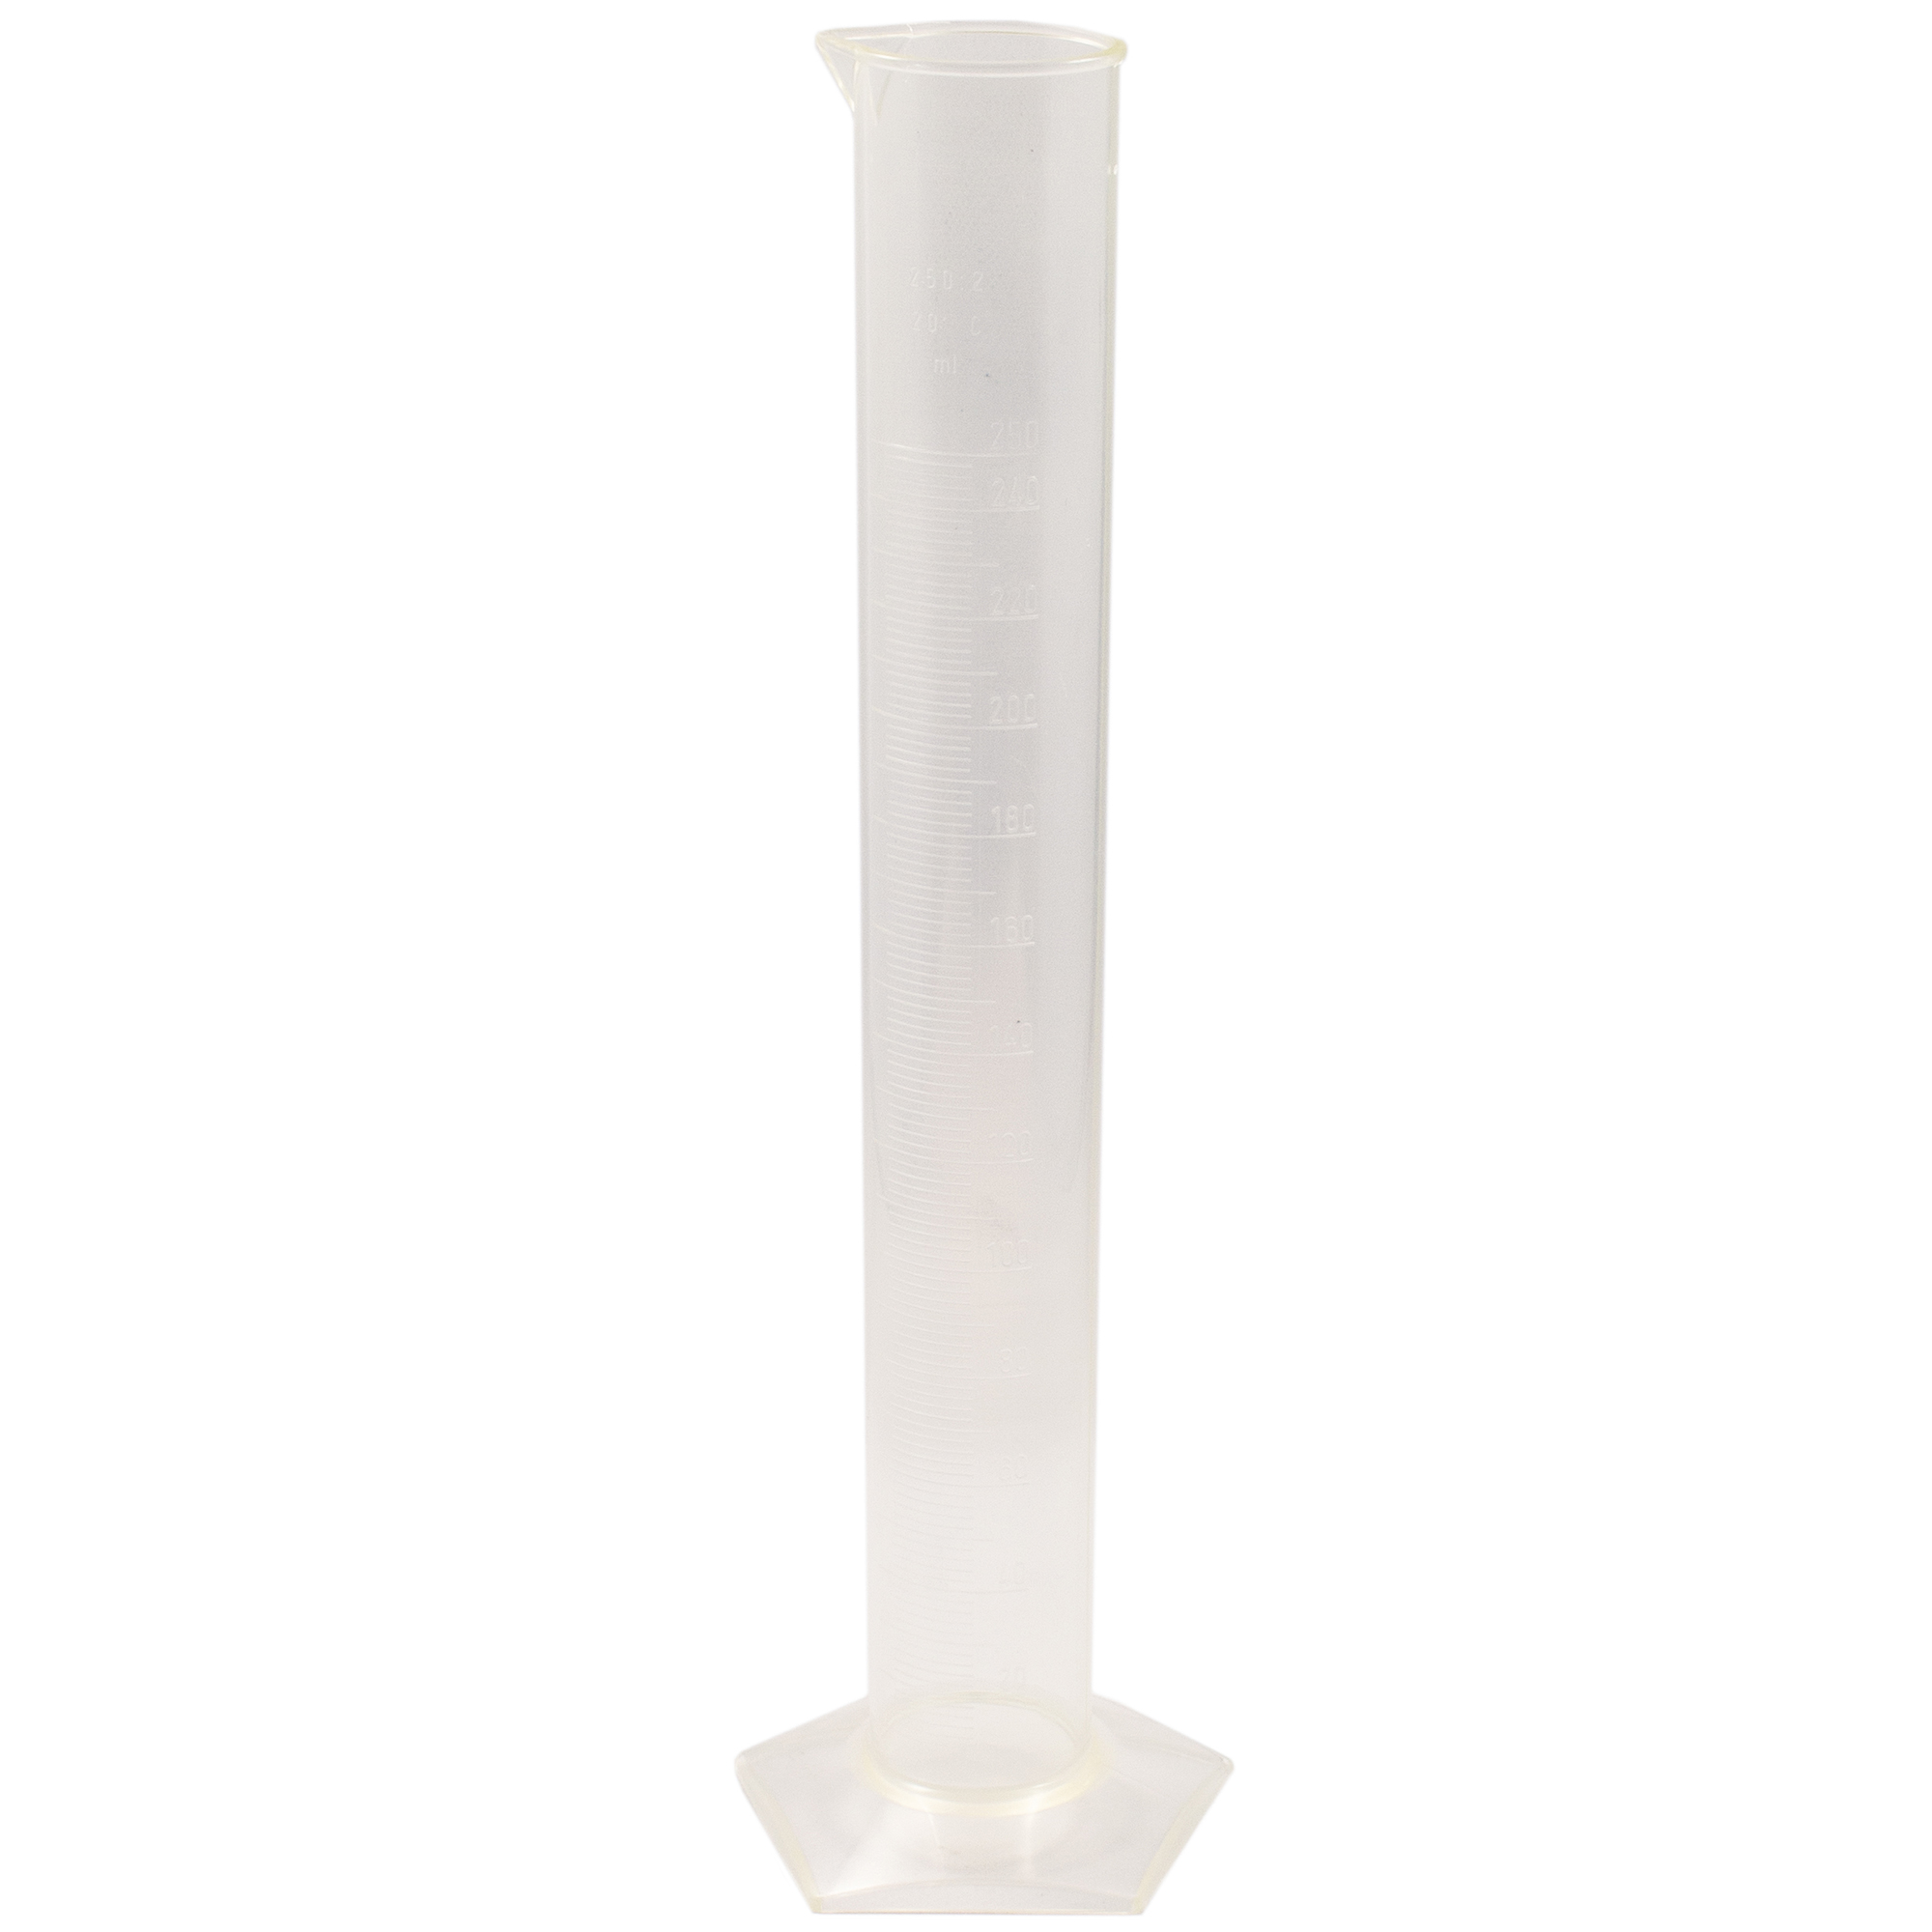 Measuring cylinder plastic (tpx) - 100ml